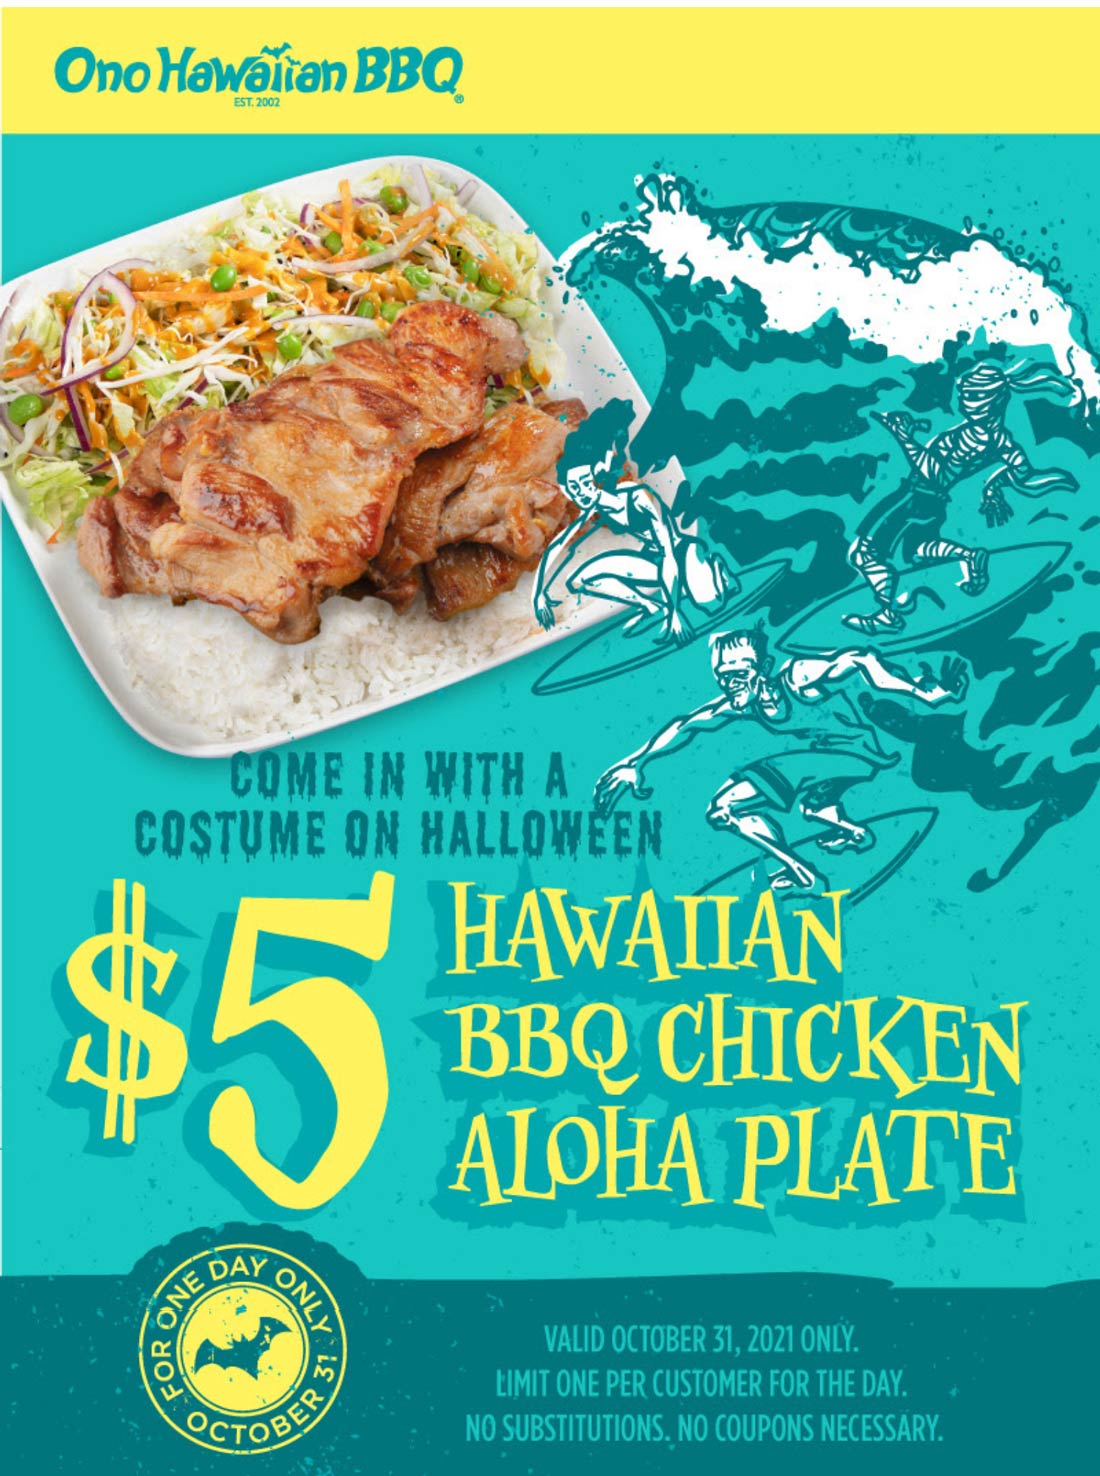 Ono Hawaiian BBQ restaurants Coupon  $5 chicken aloha plate in costume Sunday at Ono Hawaiian BBQ #onohawaiianbbq 